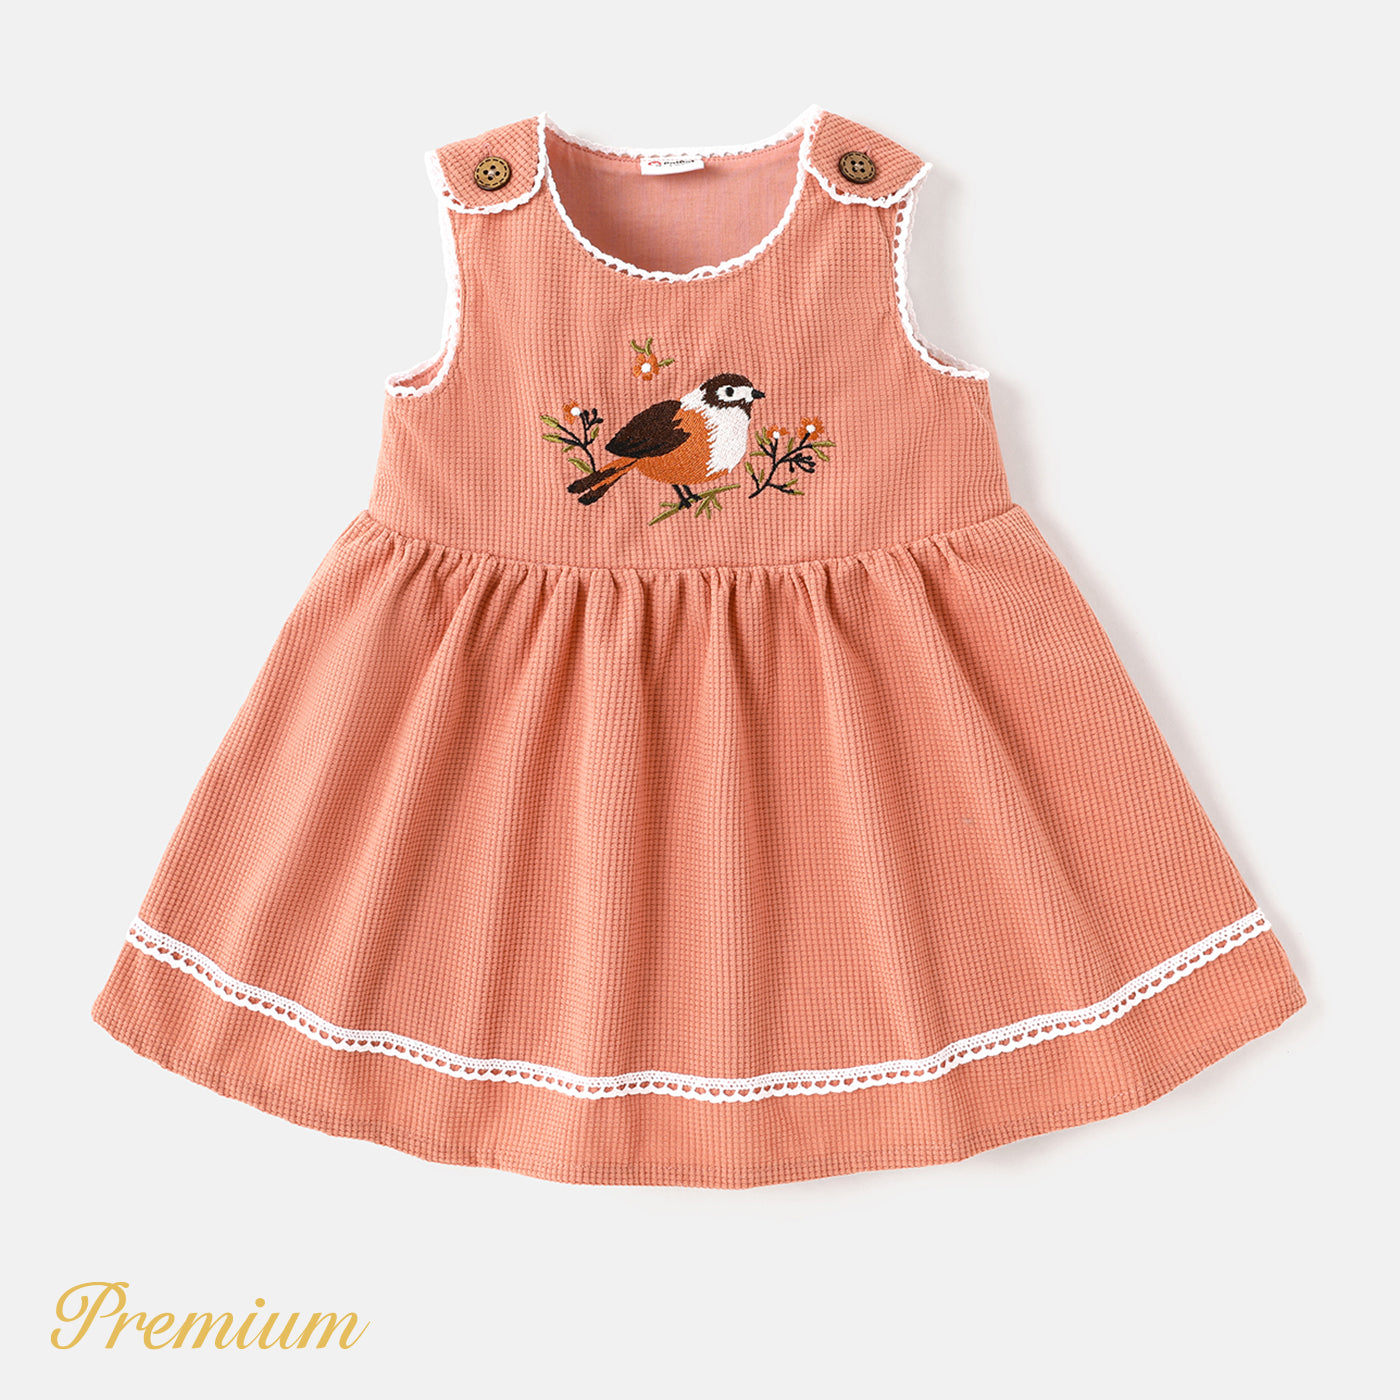 Baby Girl Bird Embroidered Sleeveless Dress Premium